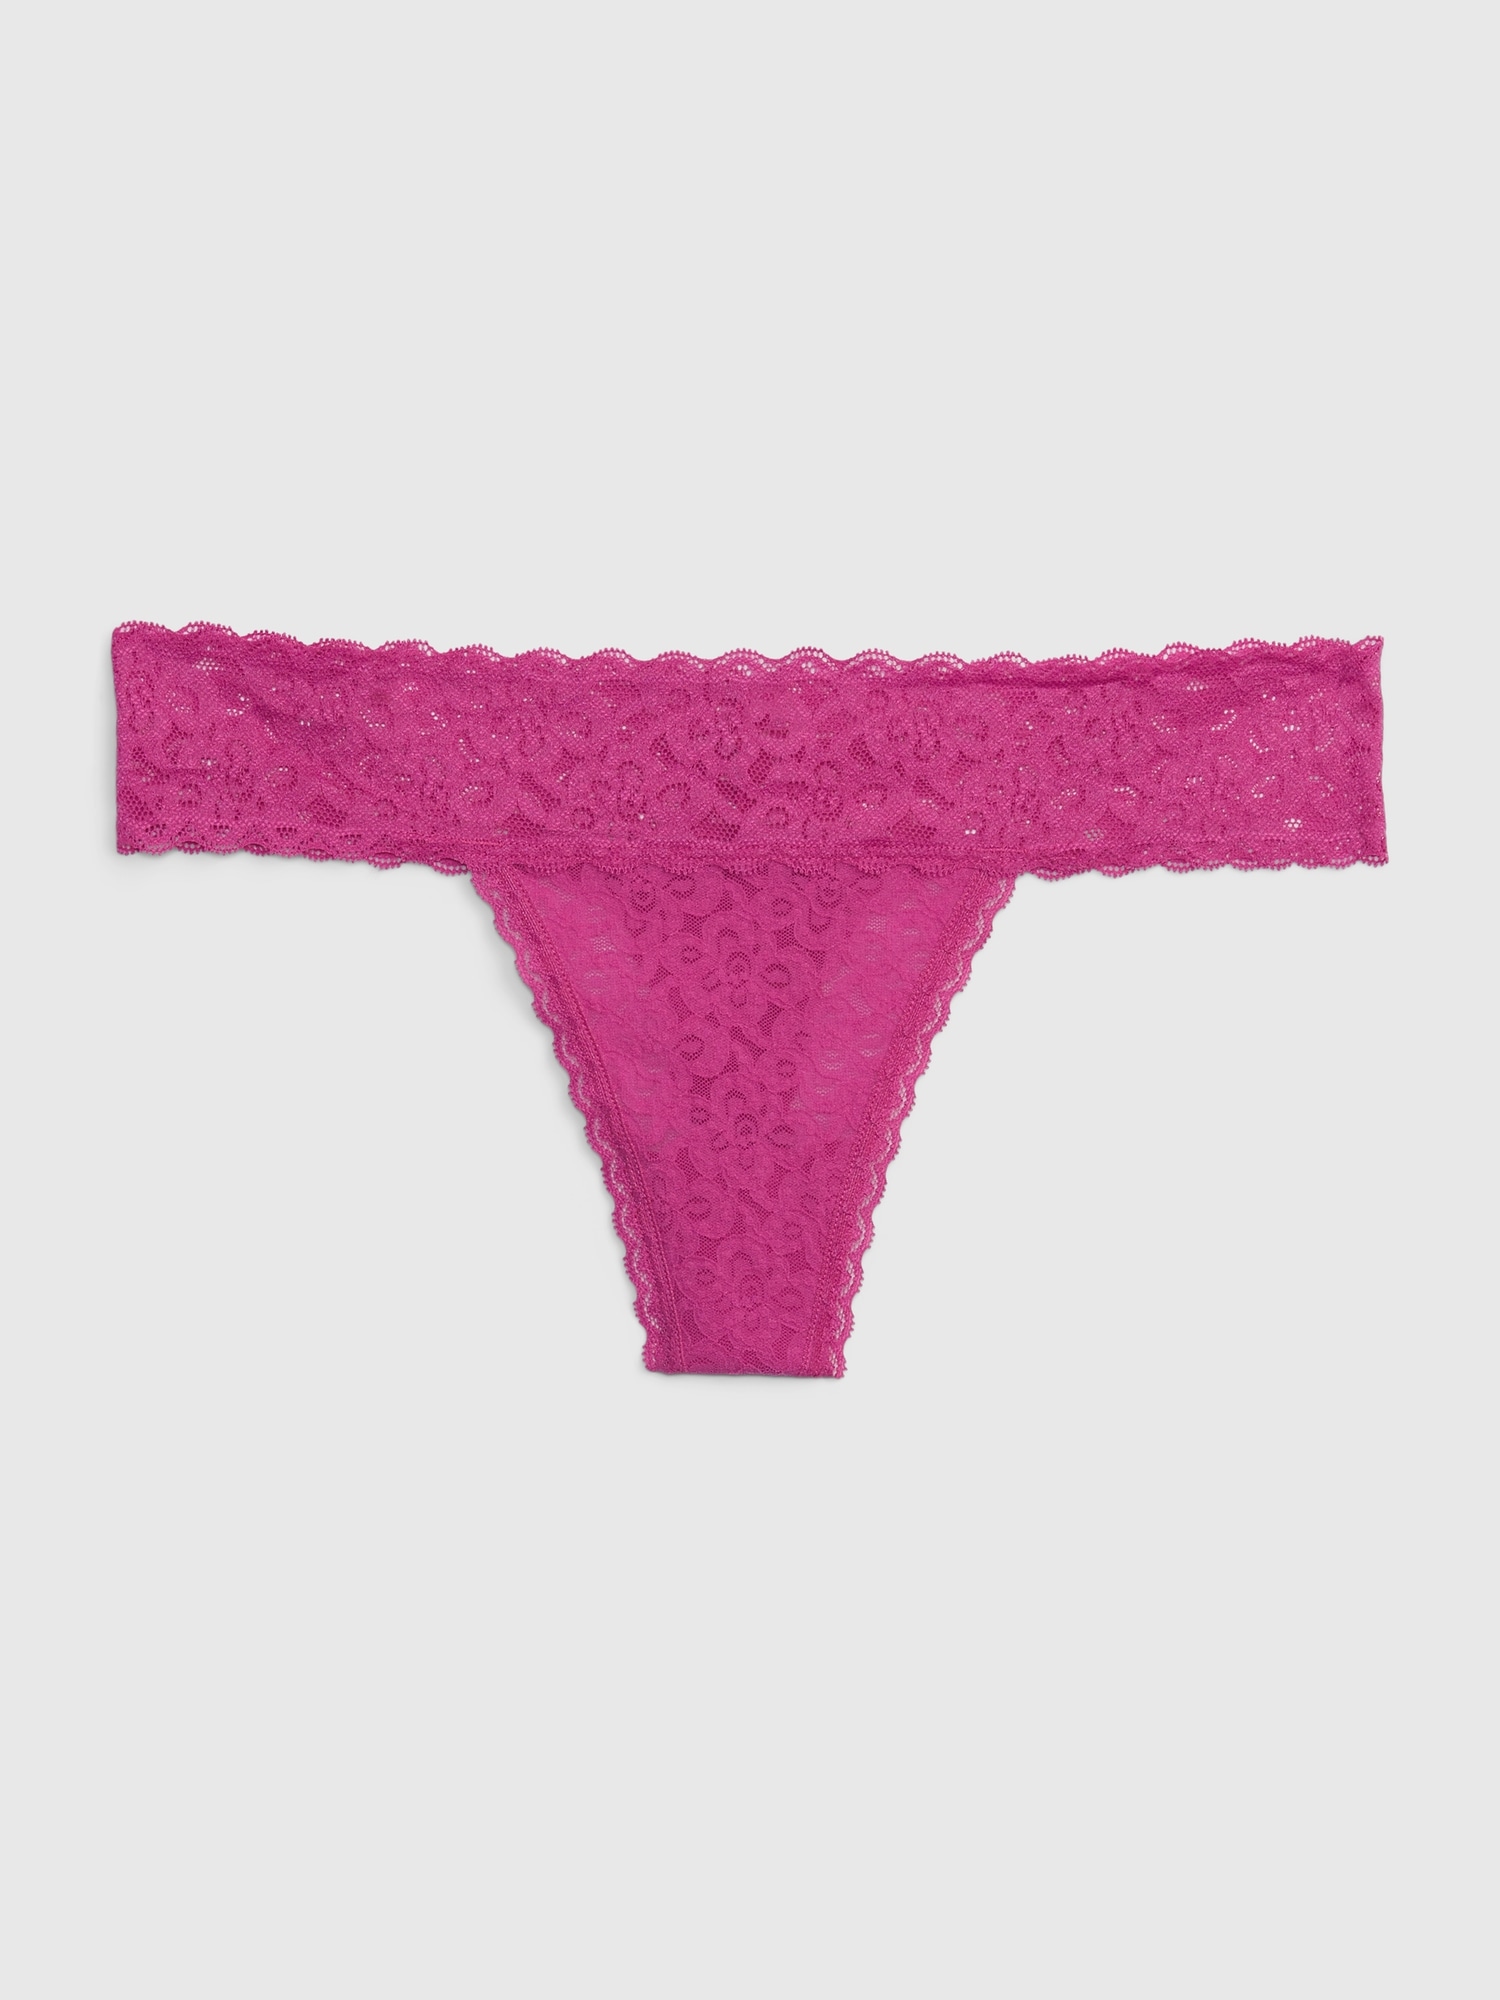 TelDen Women's Knickers Lingerie Floral Lace Thong Underwear G